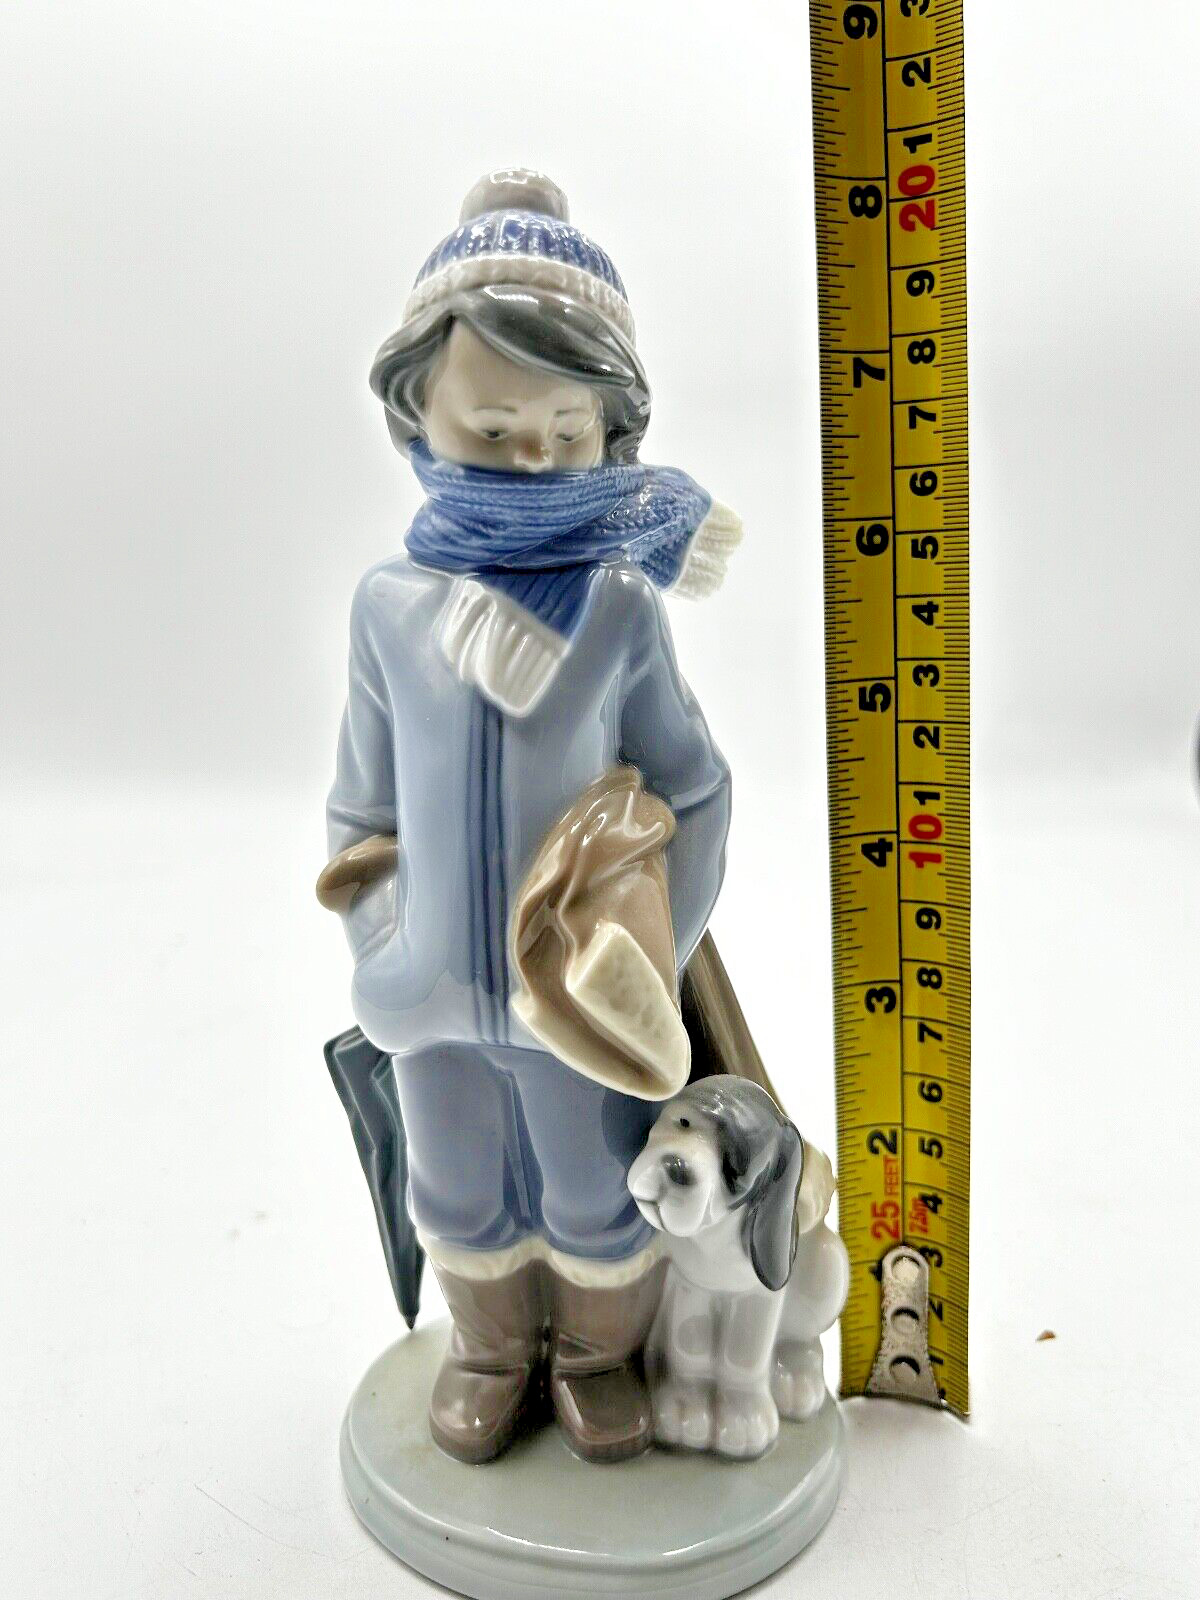 Charming Vintage Lladro Figurine #5520 Winter Boy